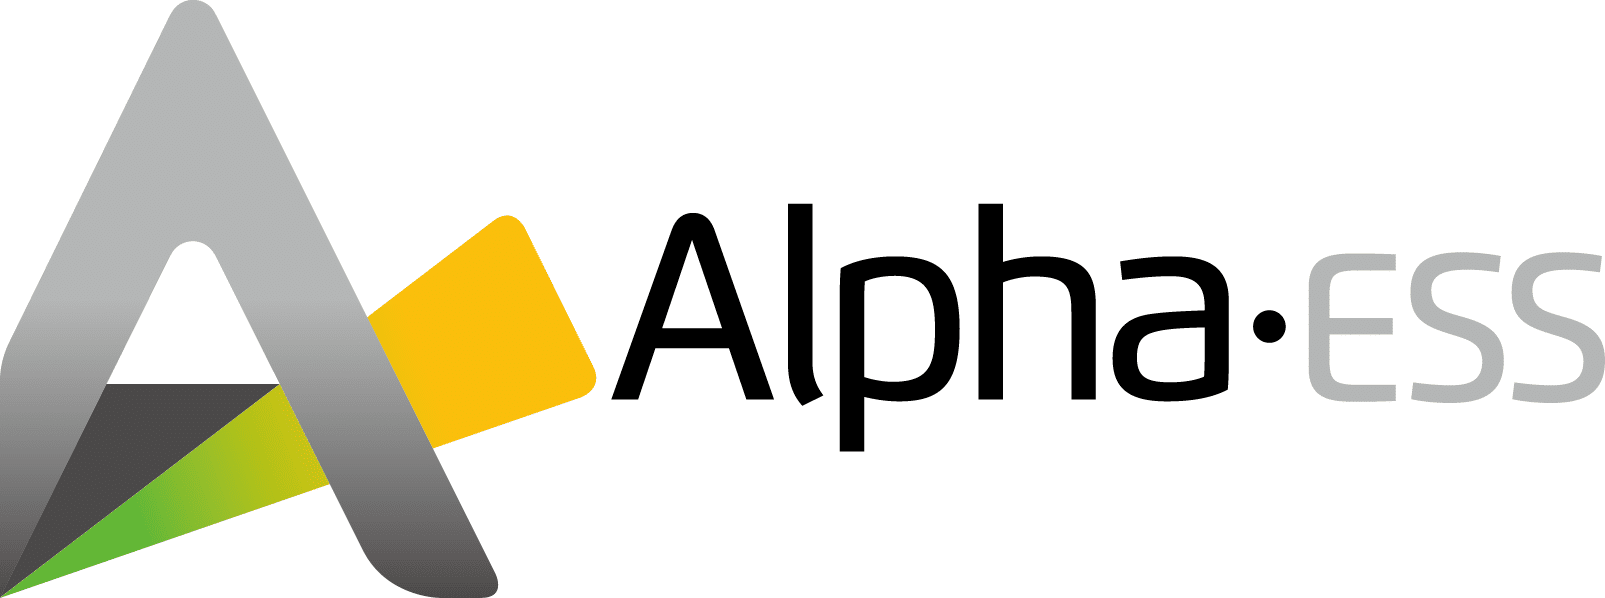 Alpha ess